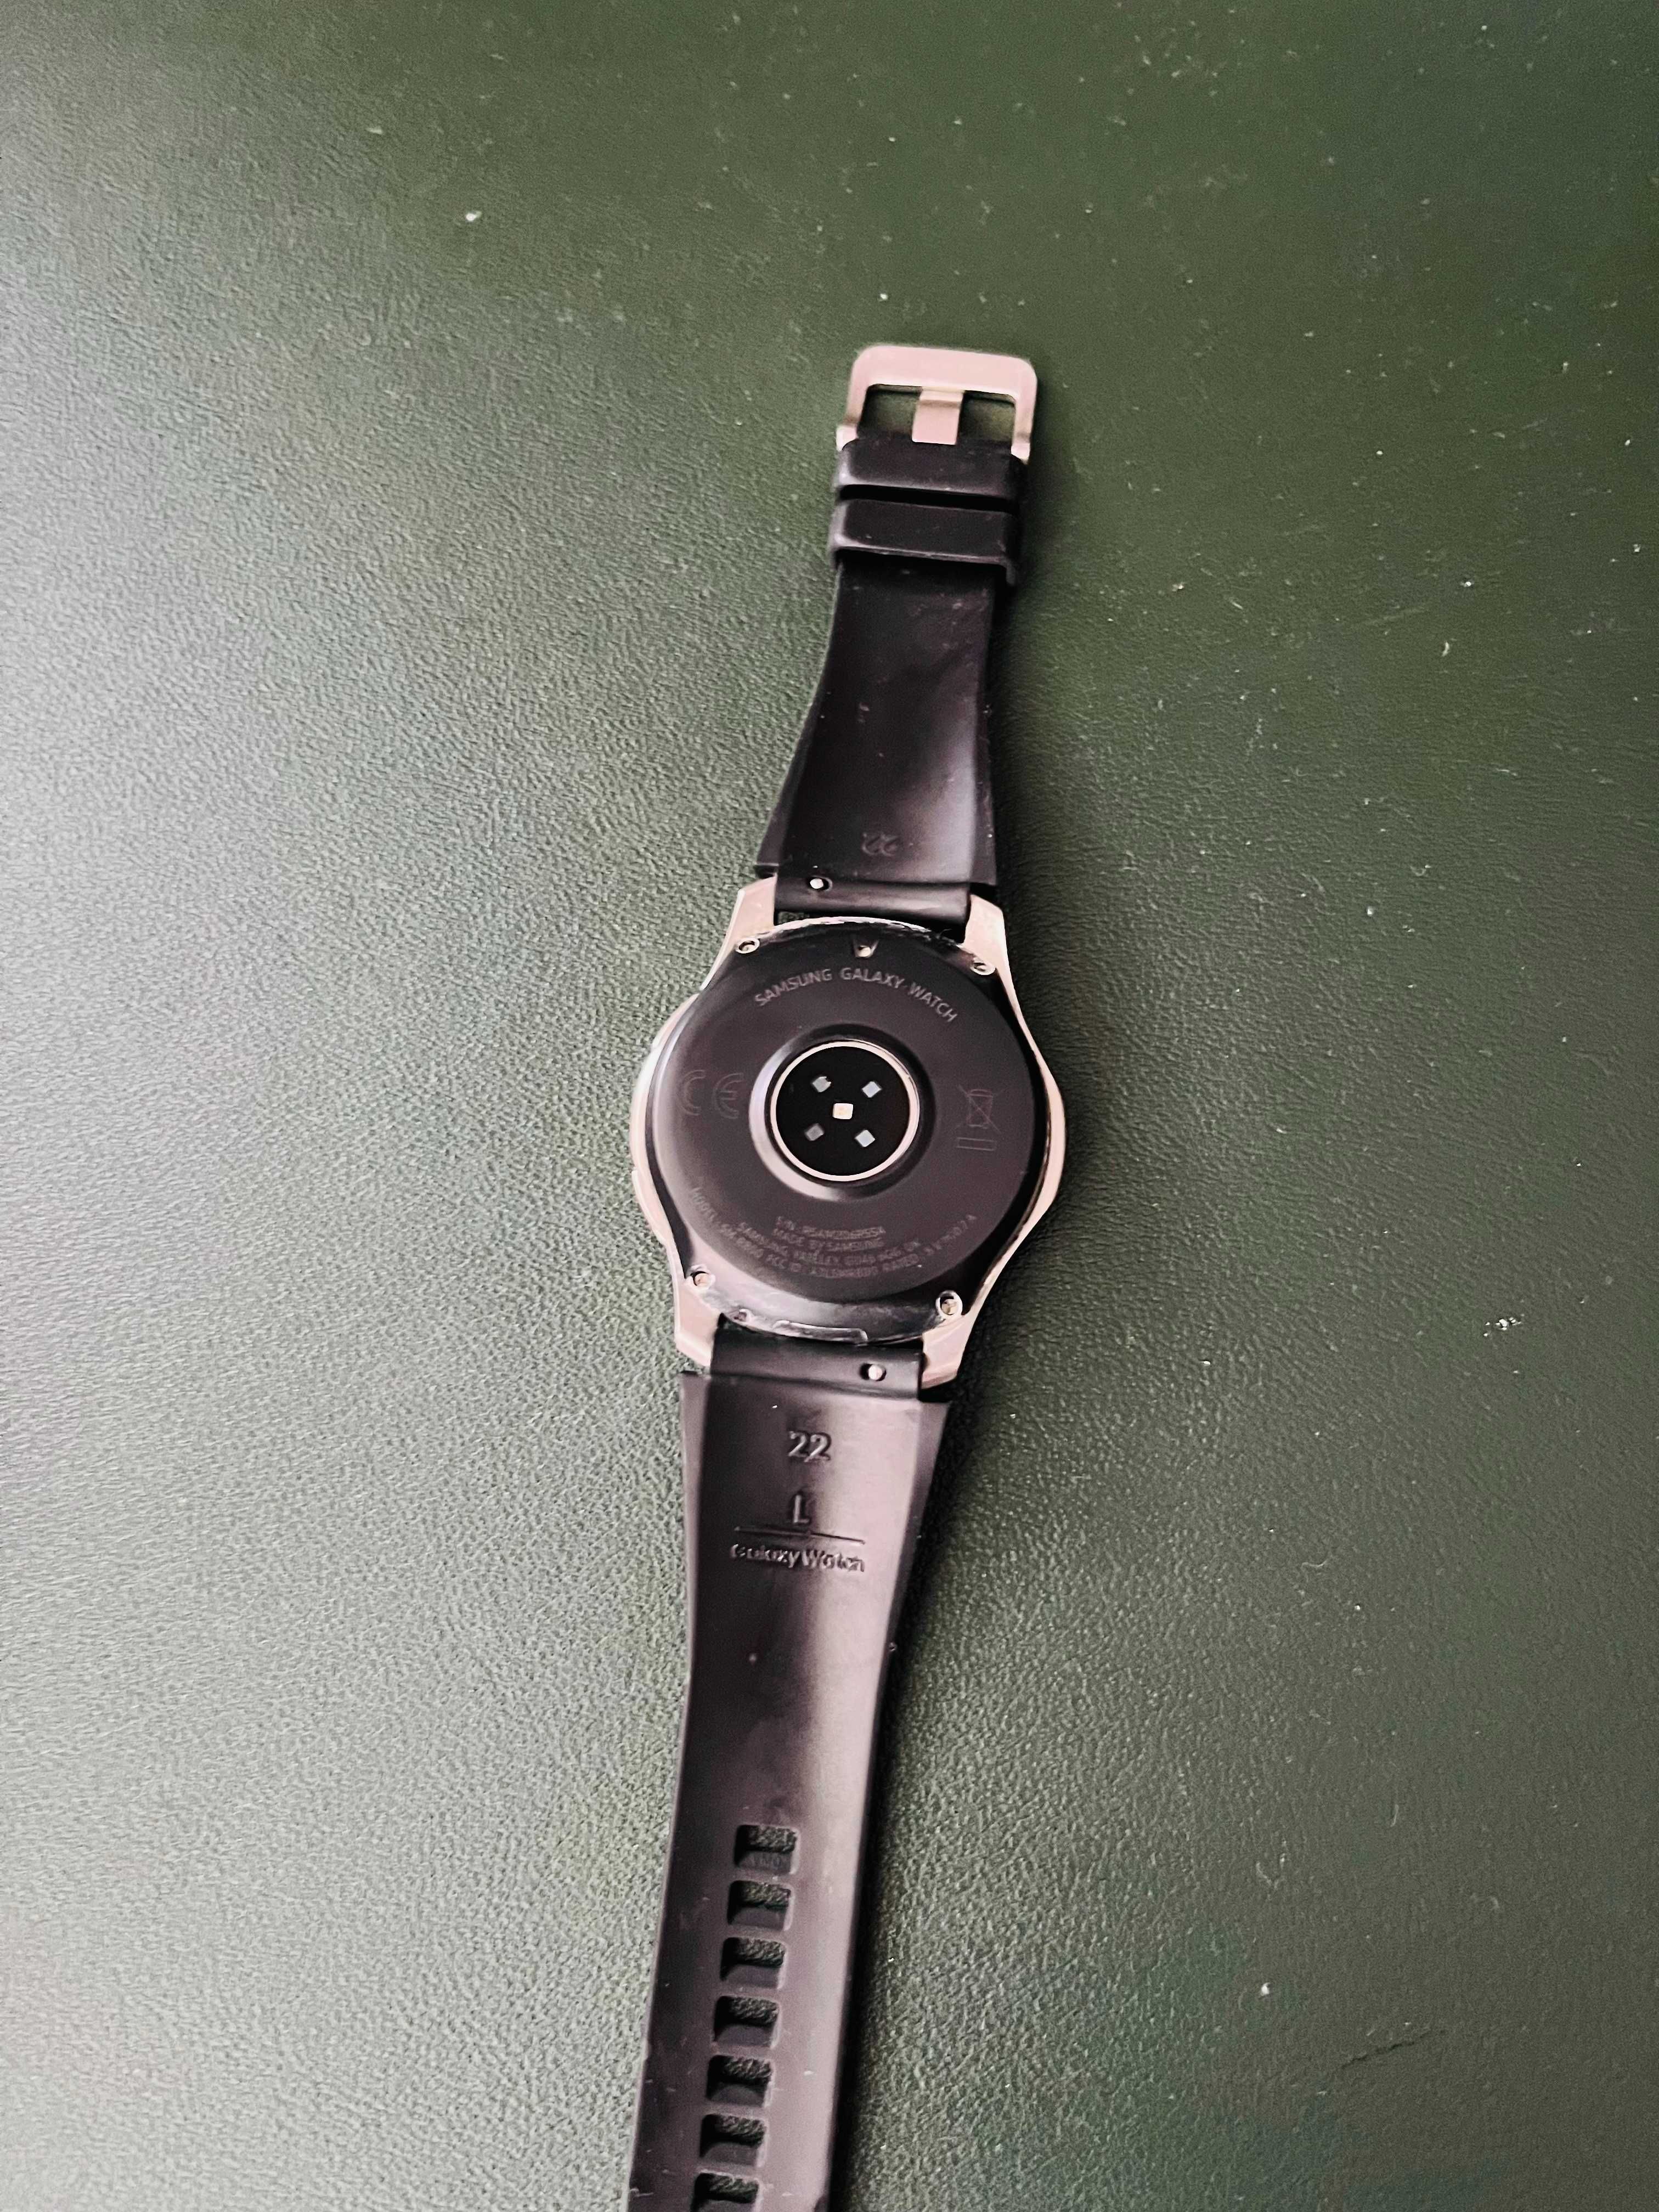 Часовник smartwatch Samsung Galaxy Watch, 46 мм, Silver